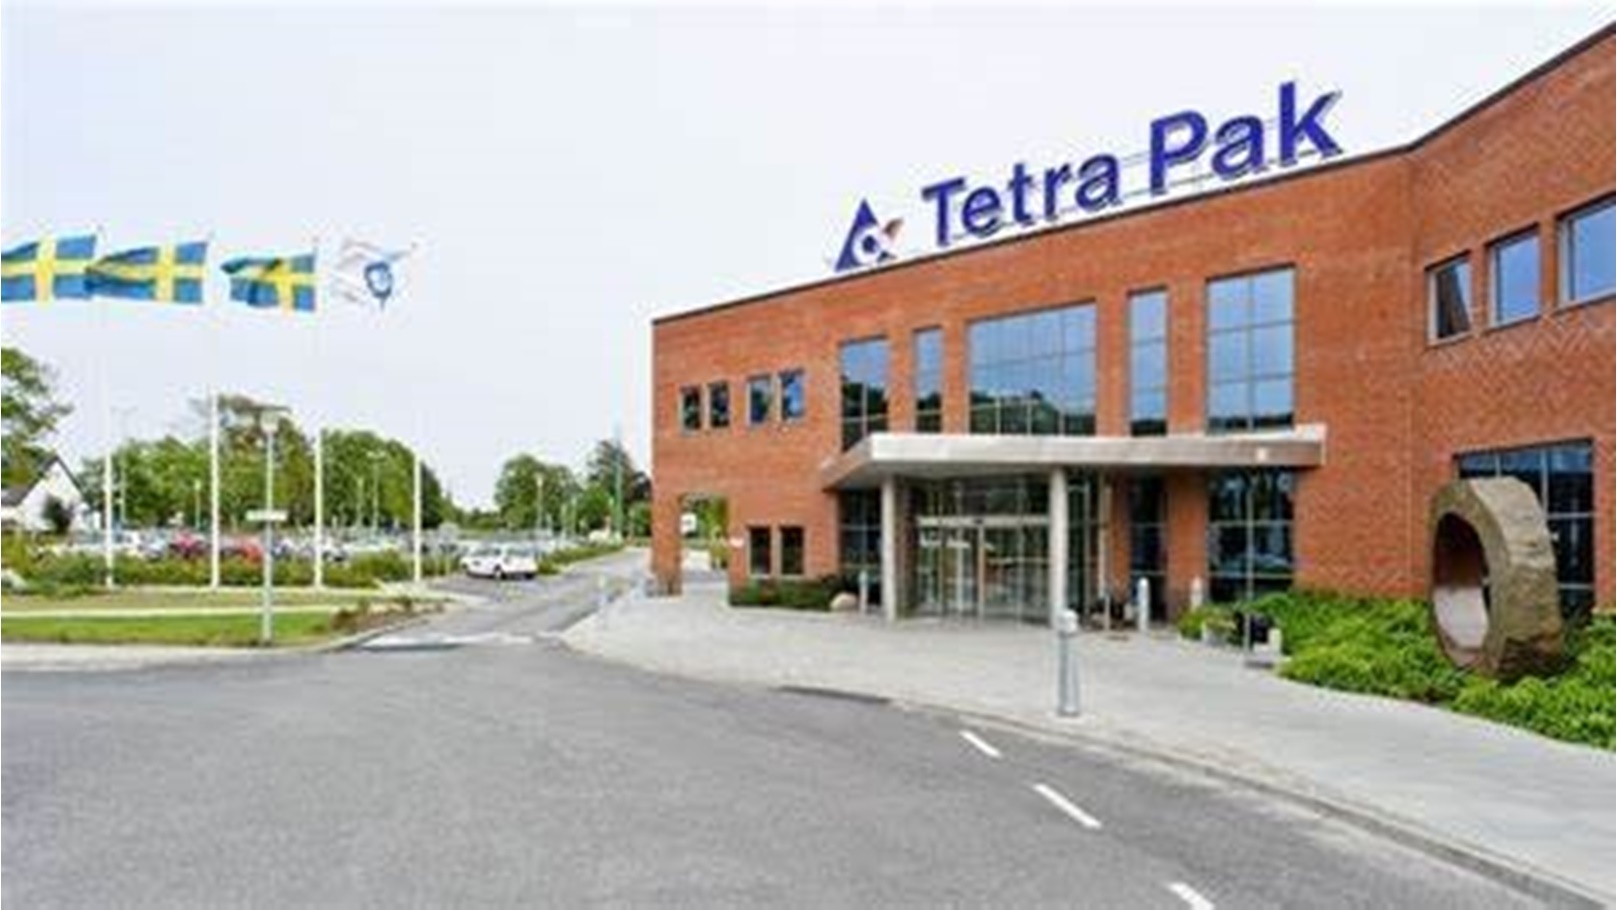 Tetra Pak Expert Services